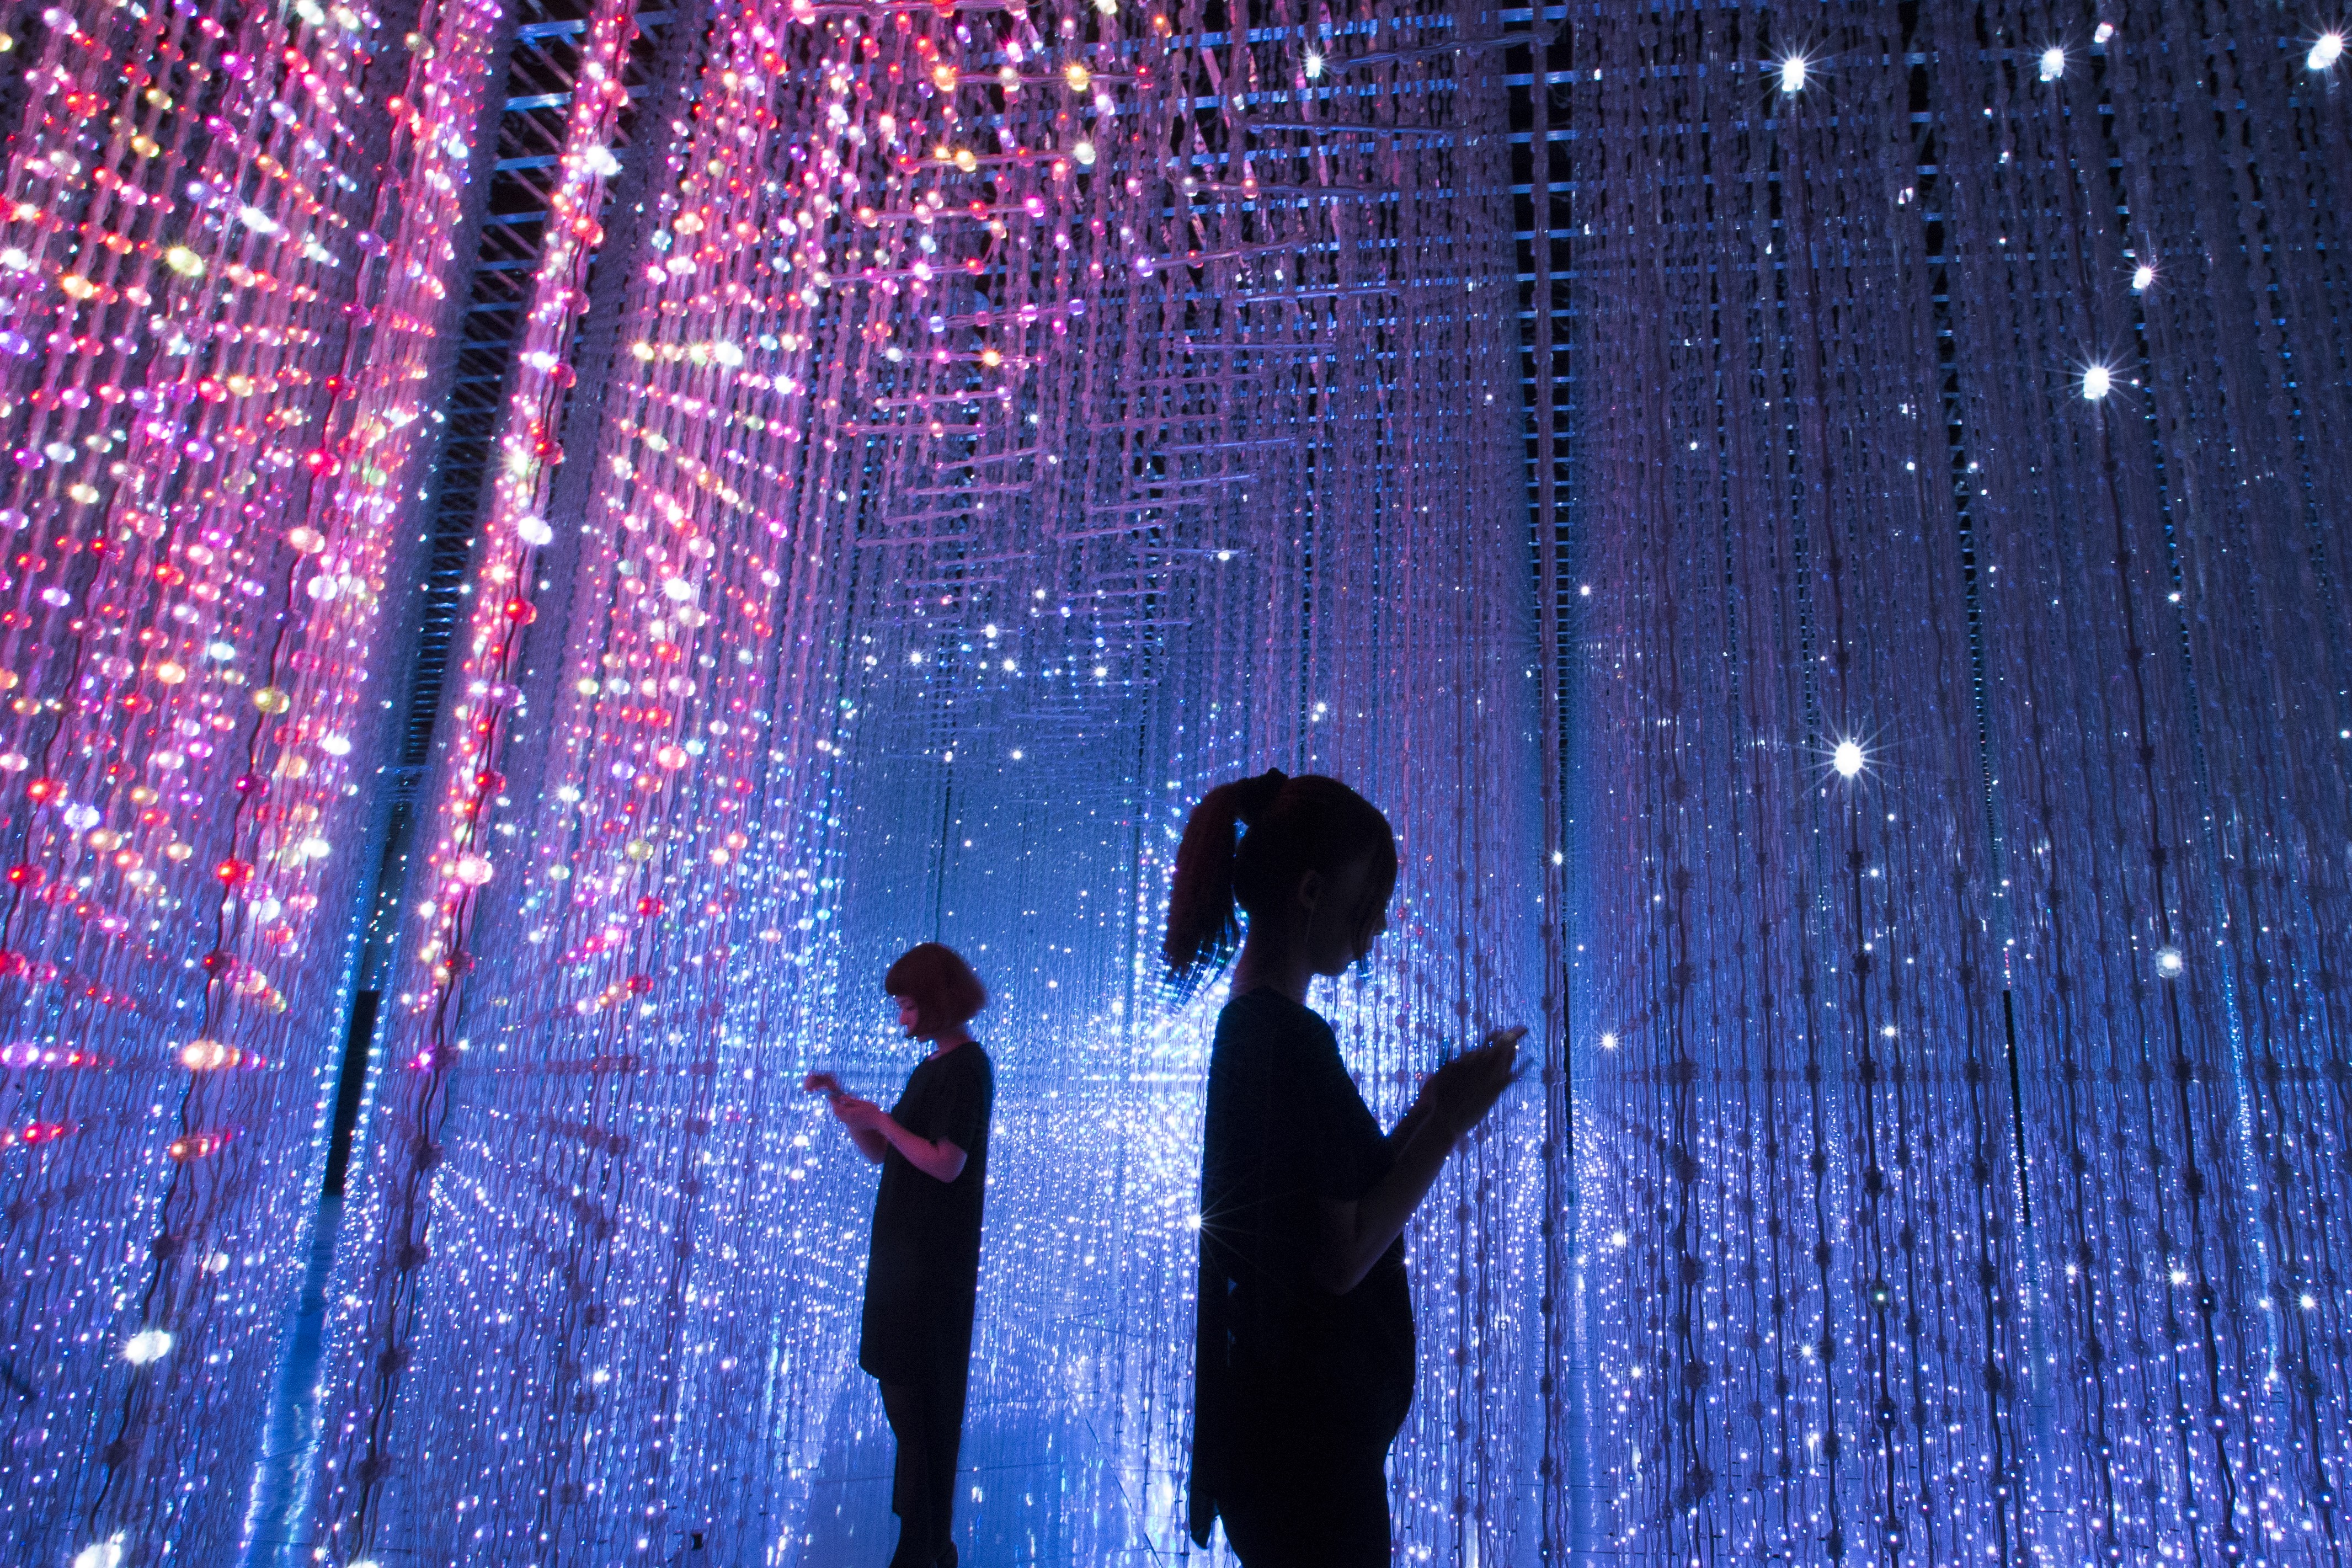 A light installation in the ArtScience Museum illuminates the creative processes.